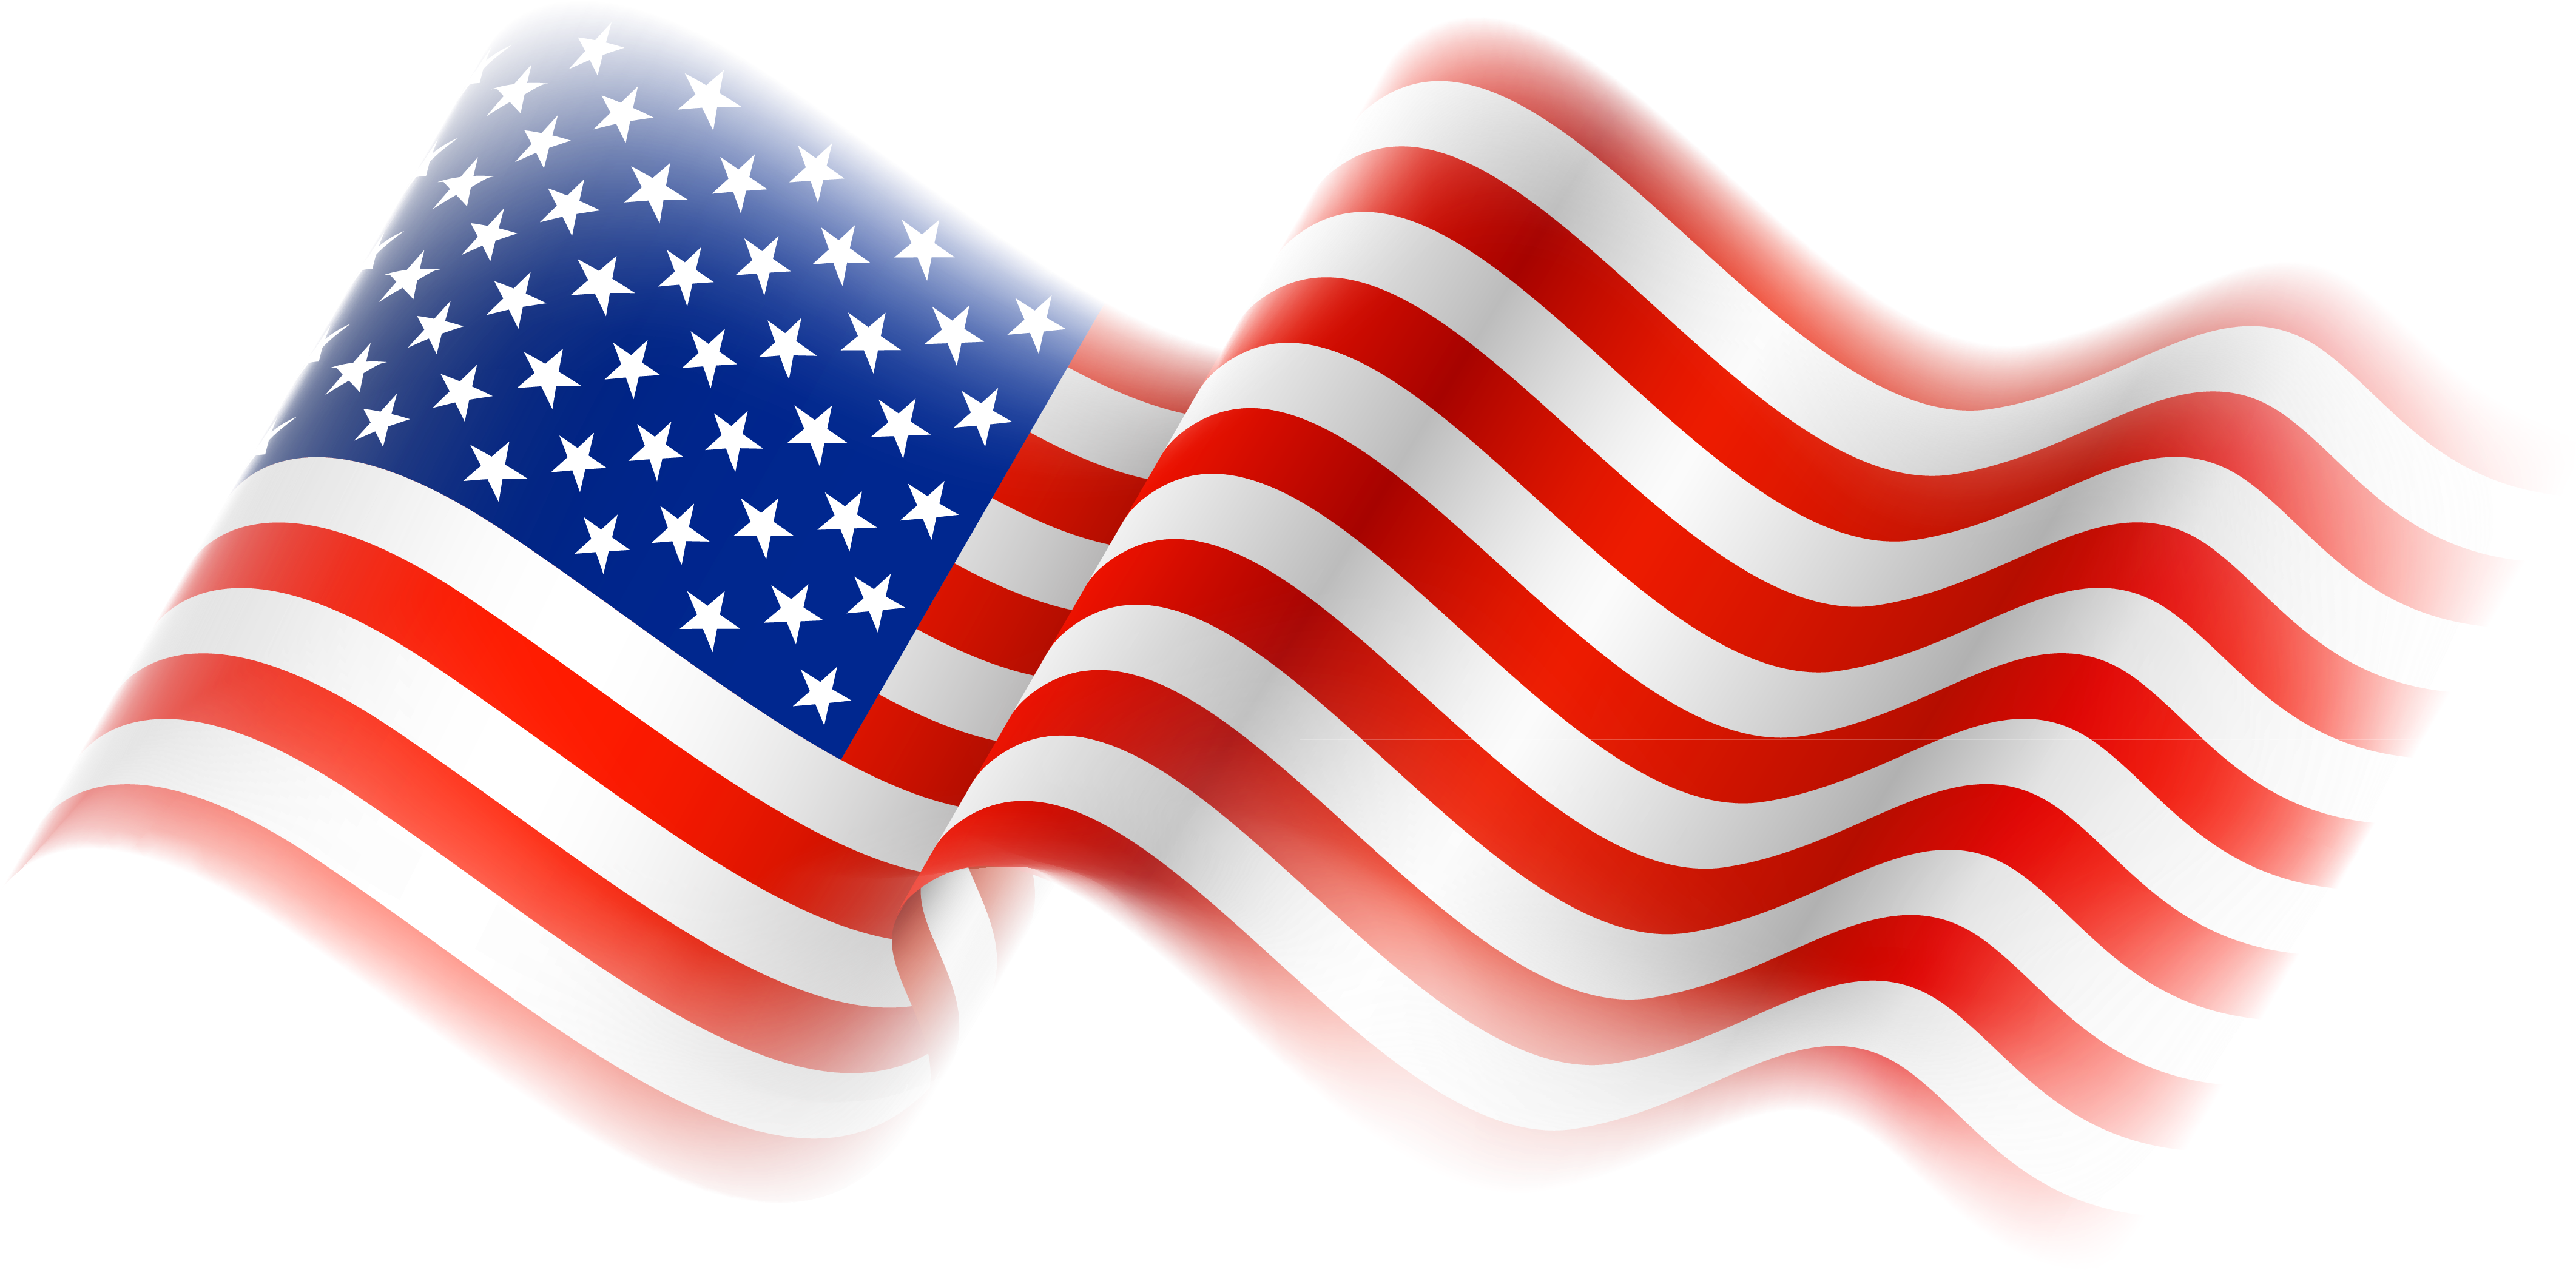 American Flag Free Download Image PNG Image